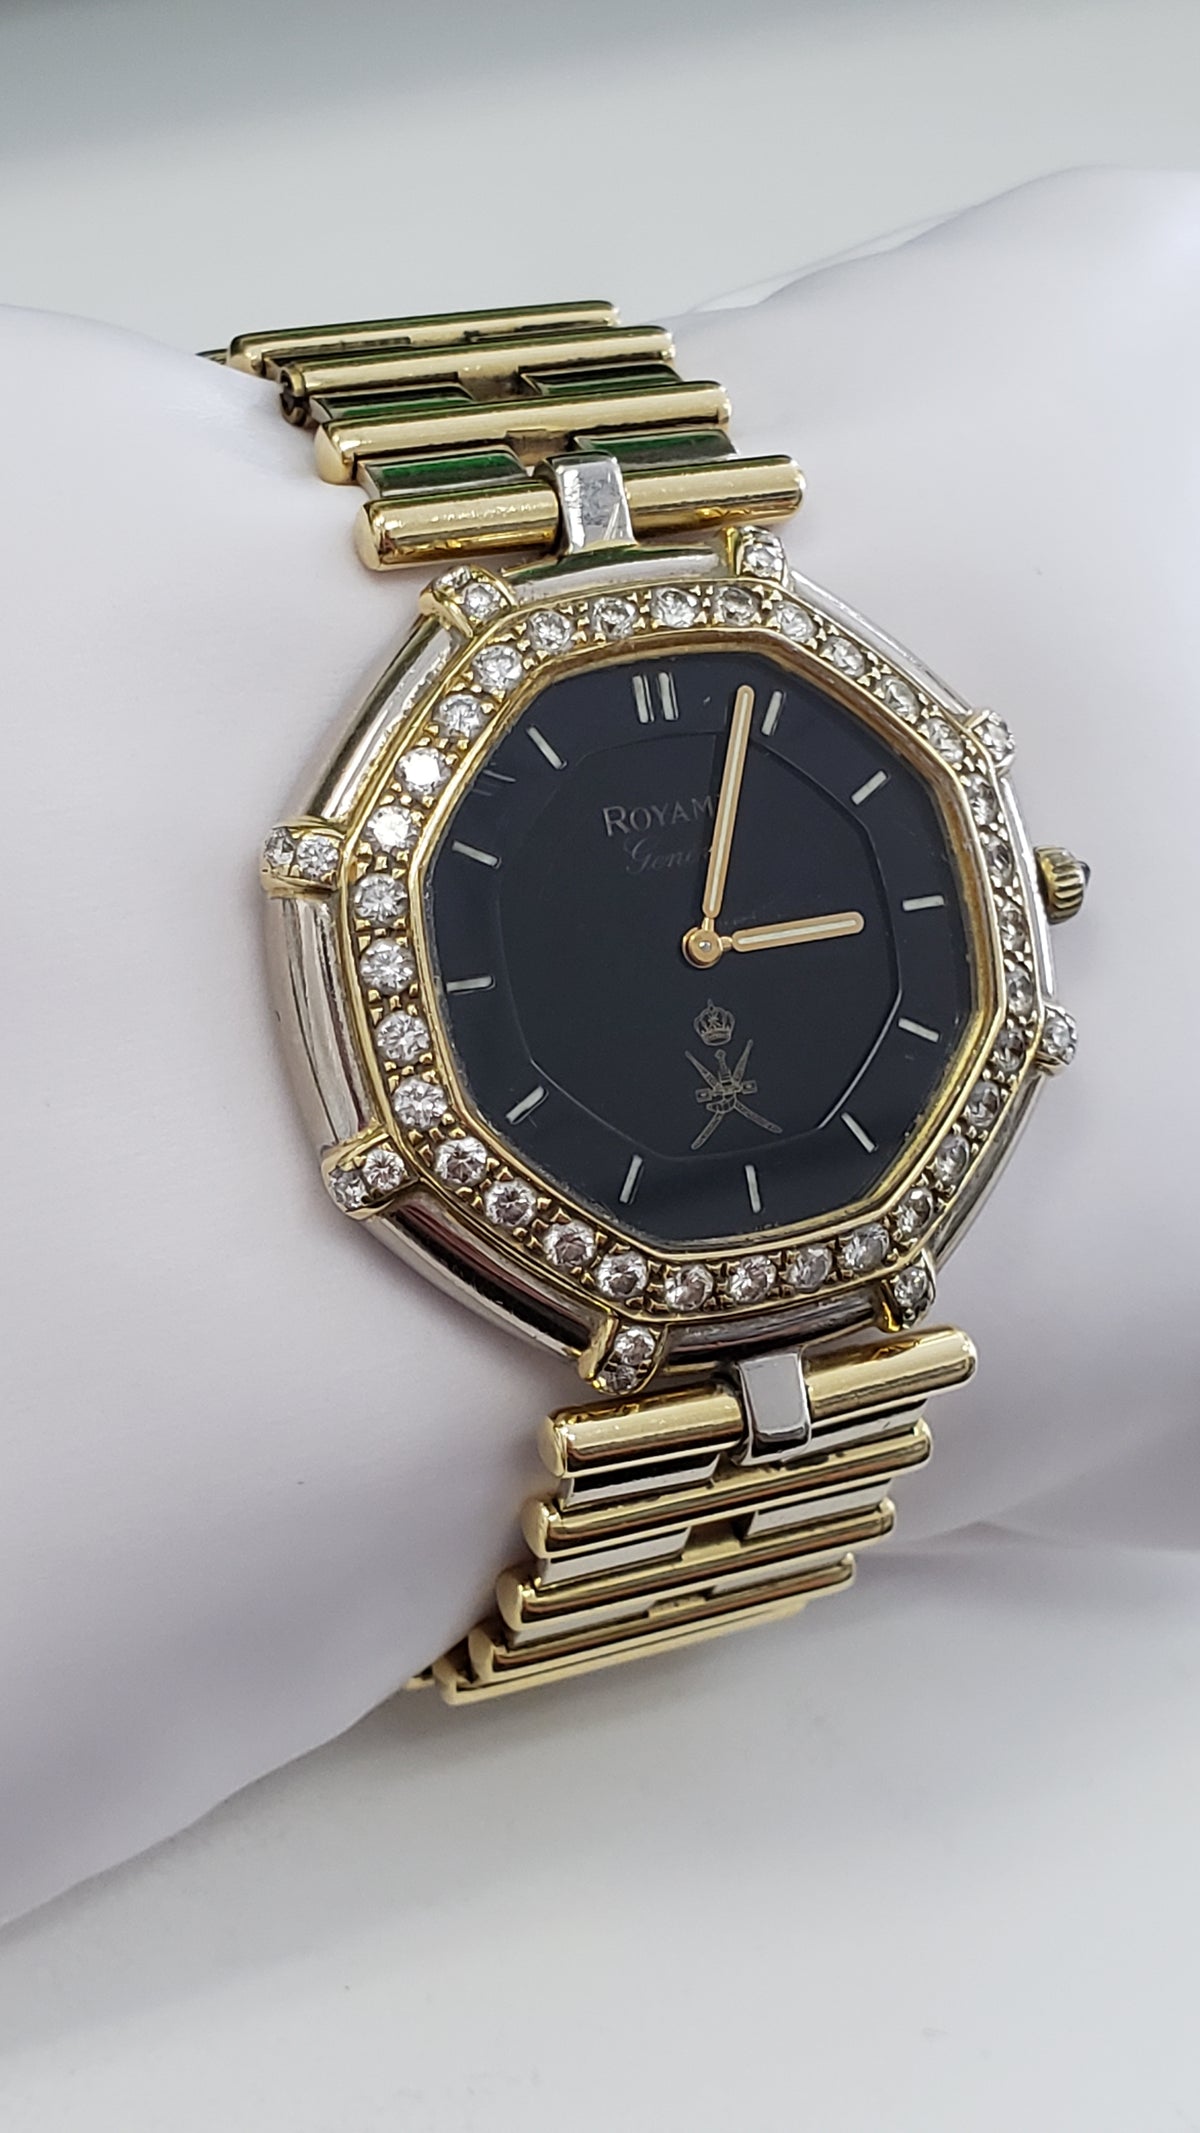 Gerald Genta Royama Geneve 18K and Stainless Steel Diamond Watch Preowned